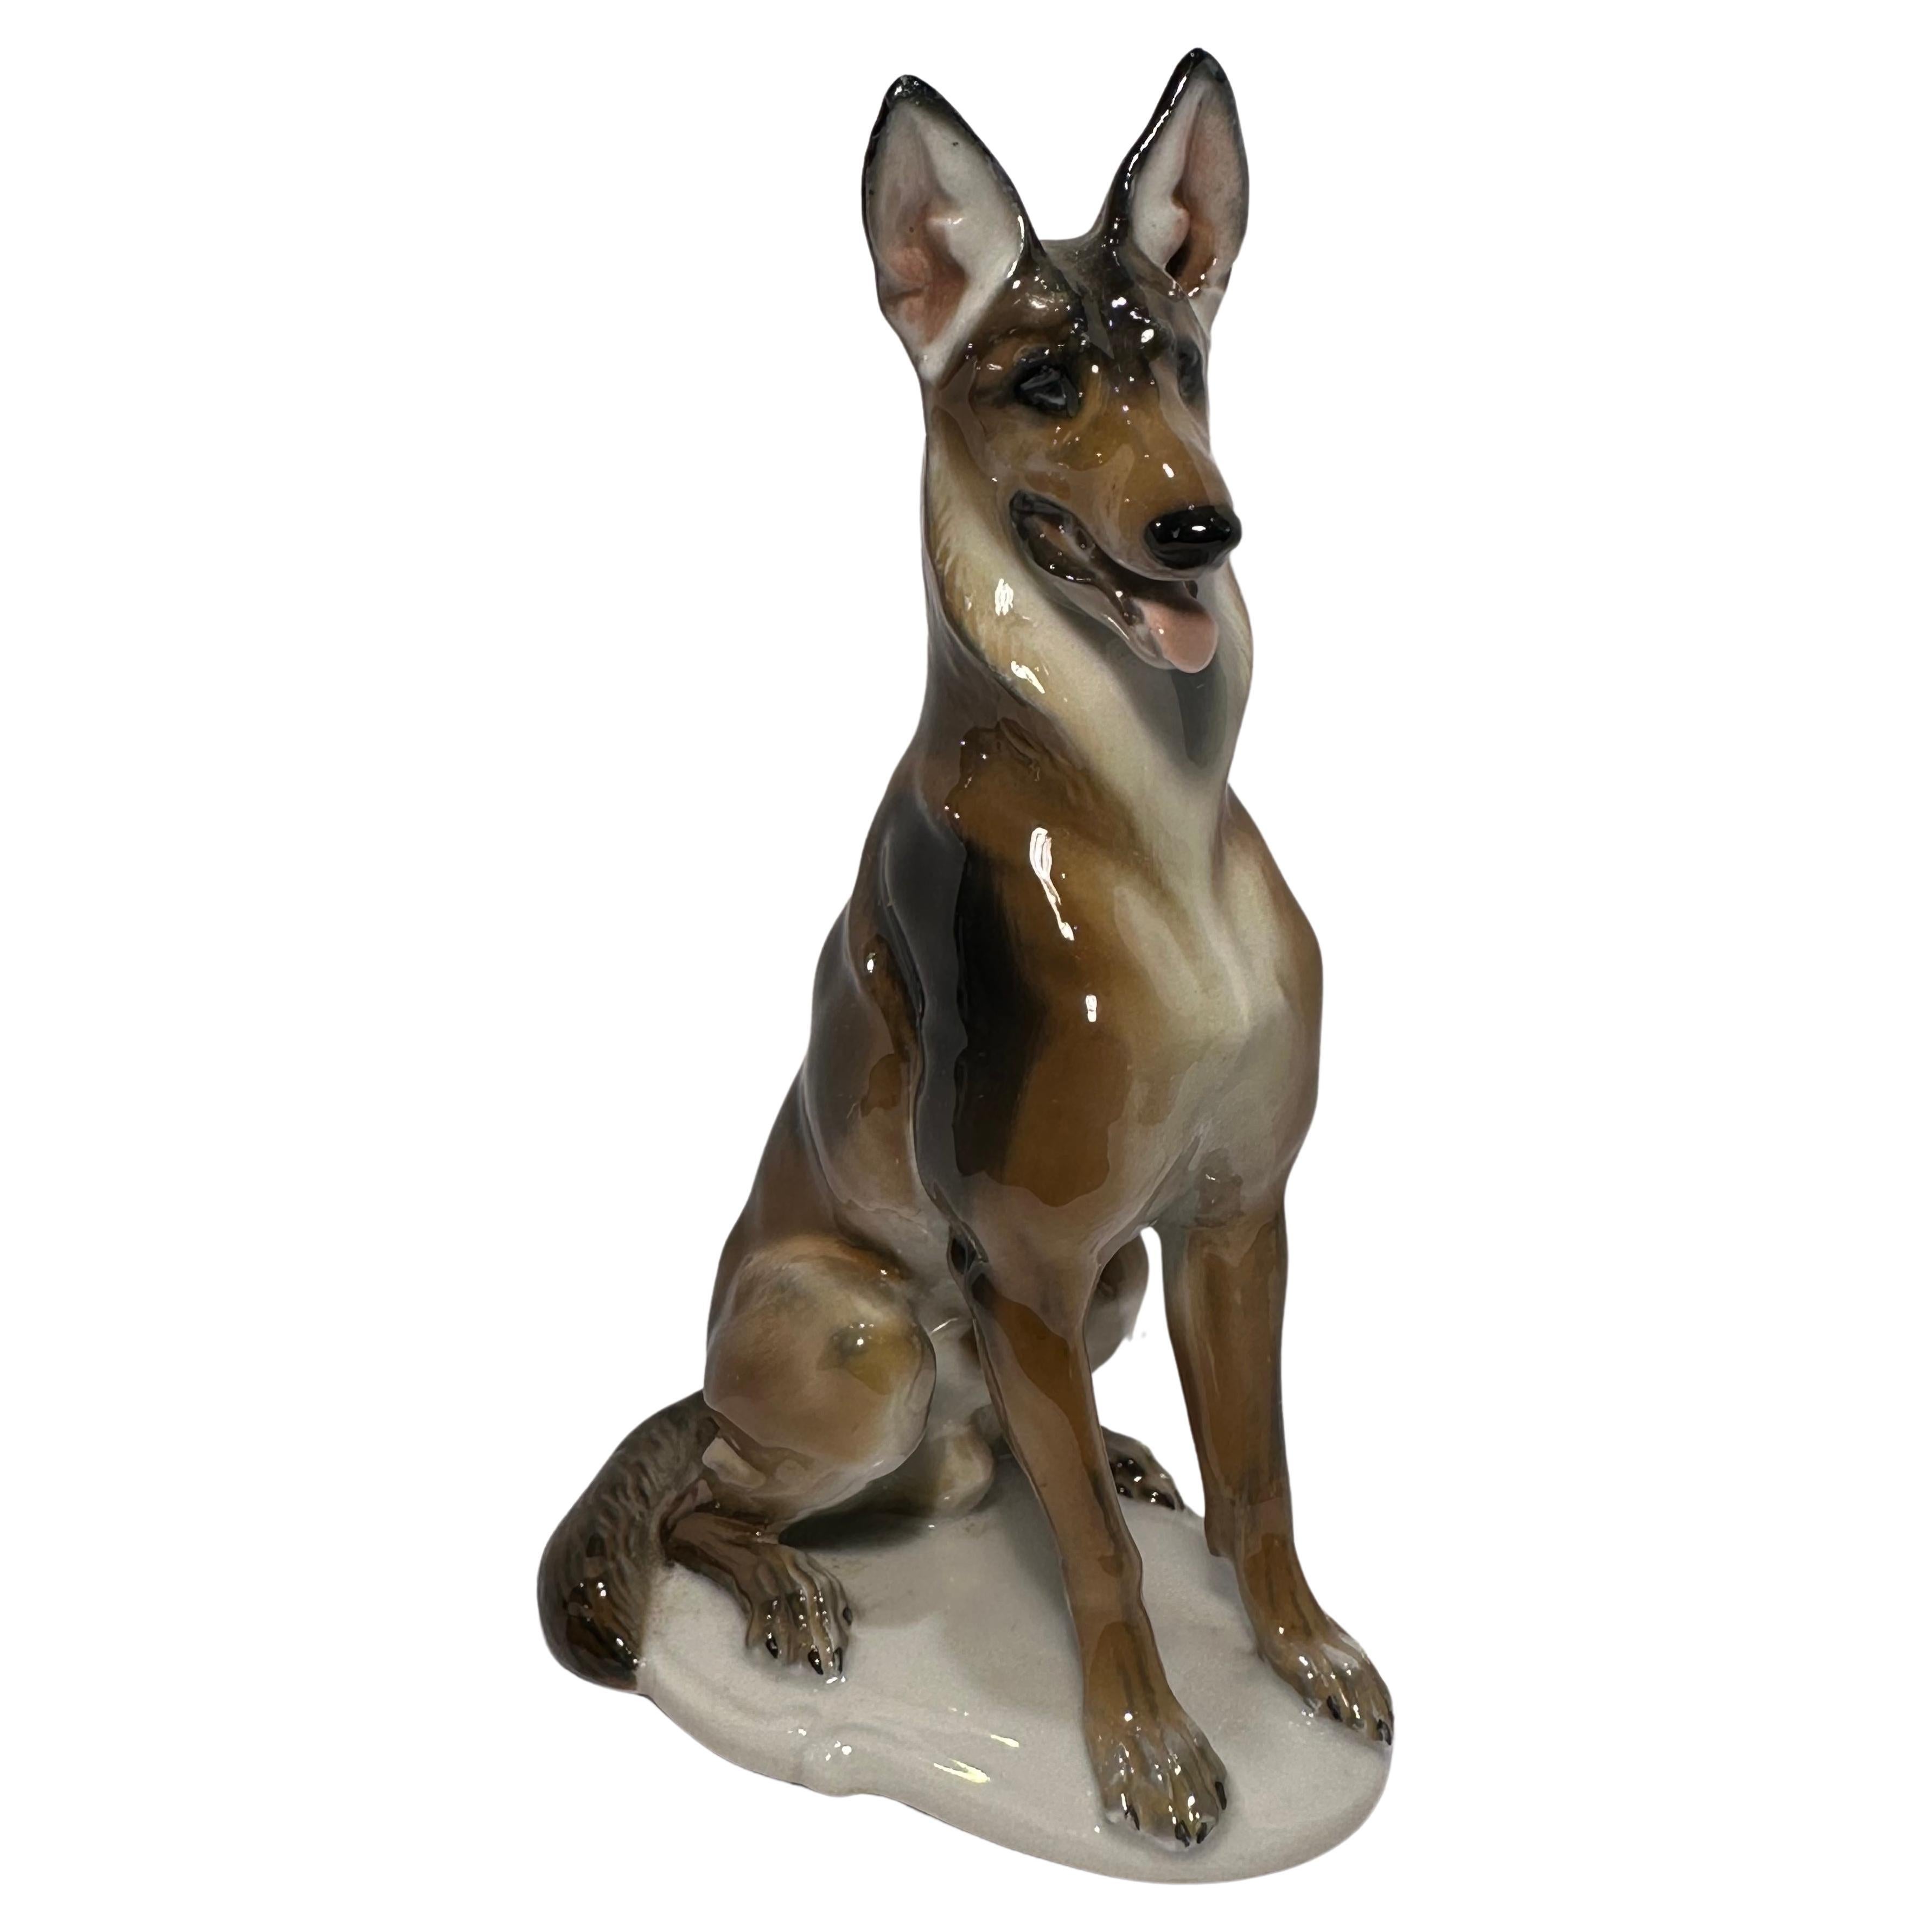  Rosenthal Germany German Shepherd Porcelain Dog Figurine Artist Theodor Karner